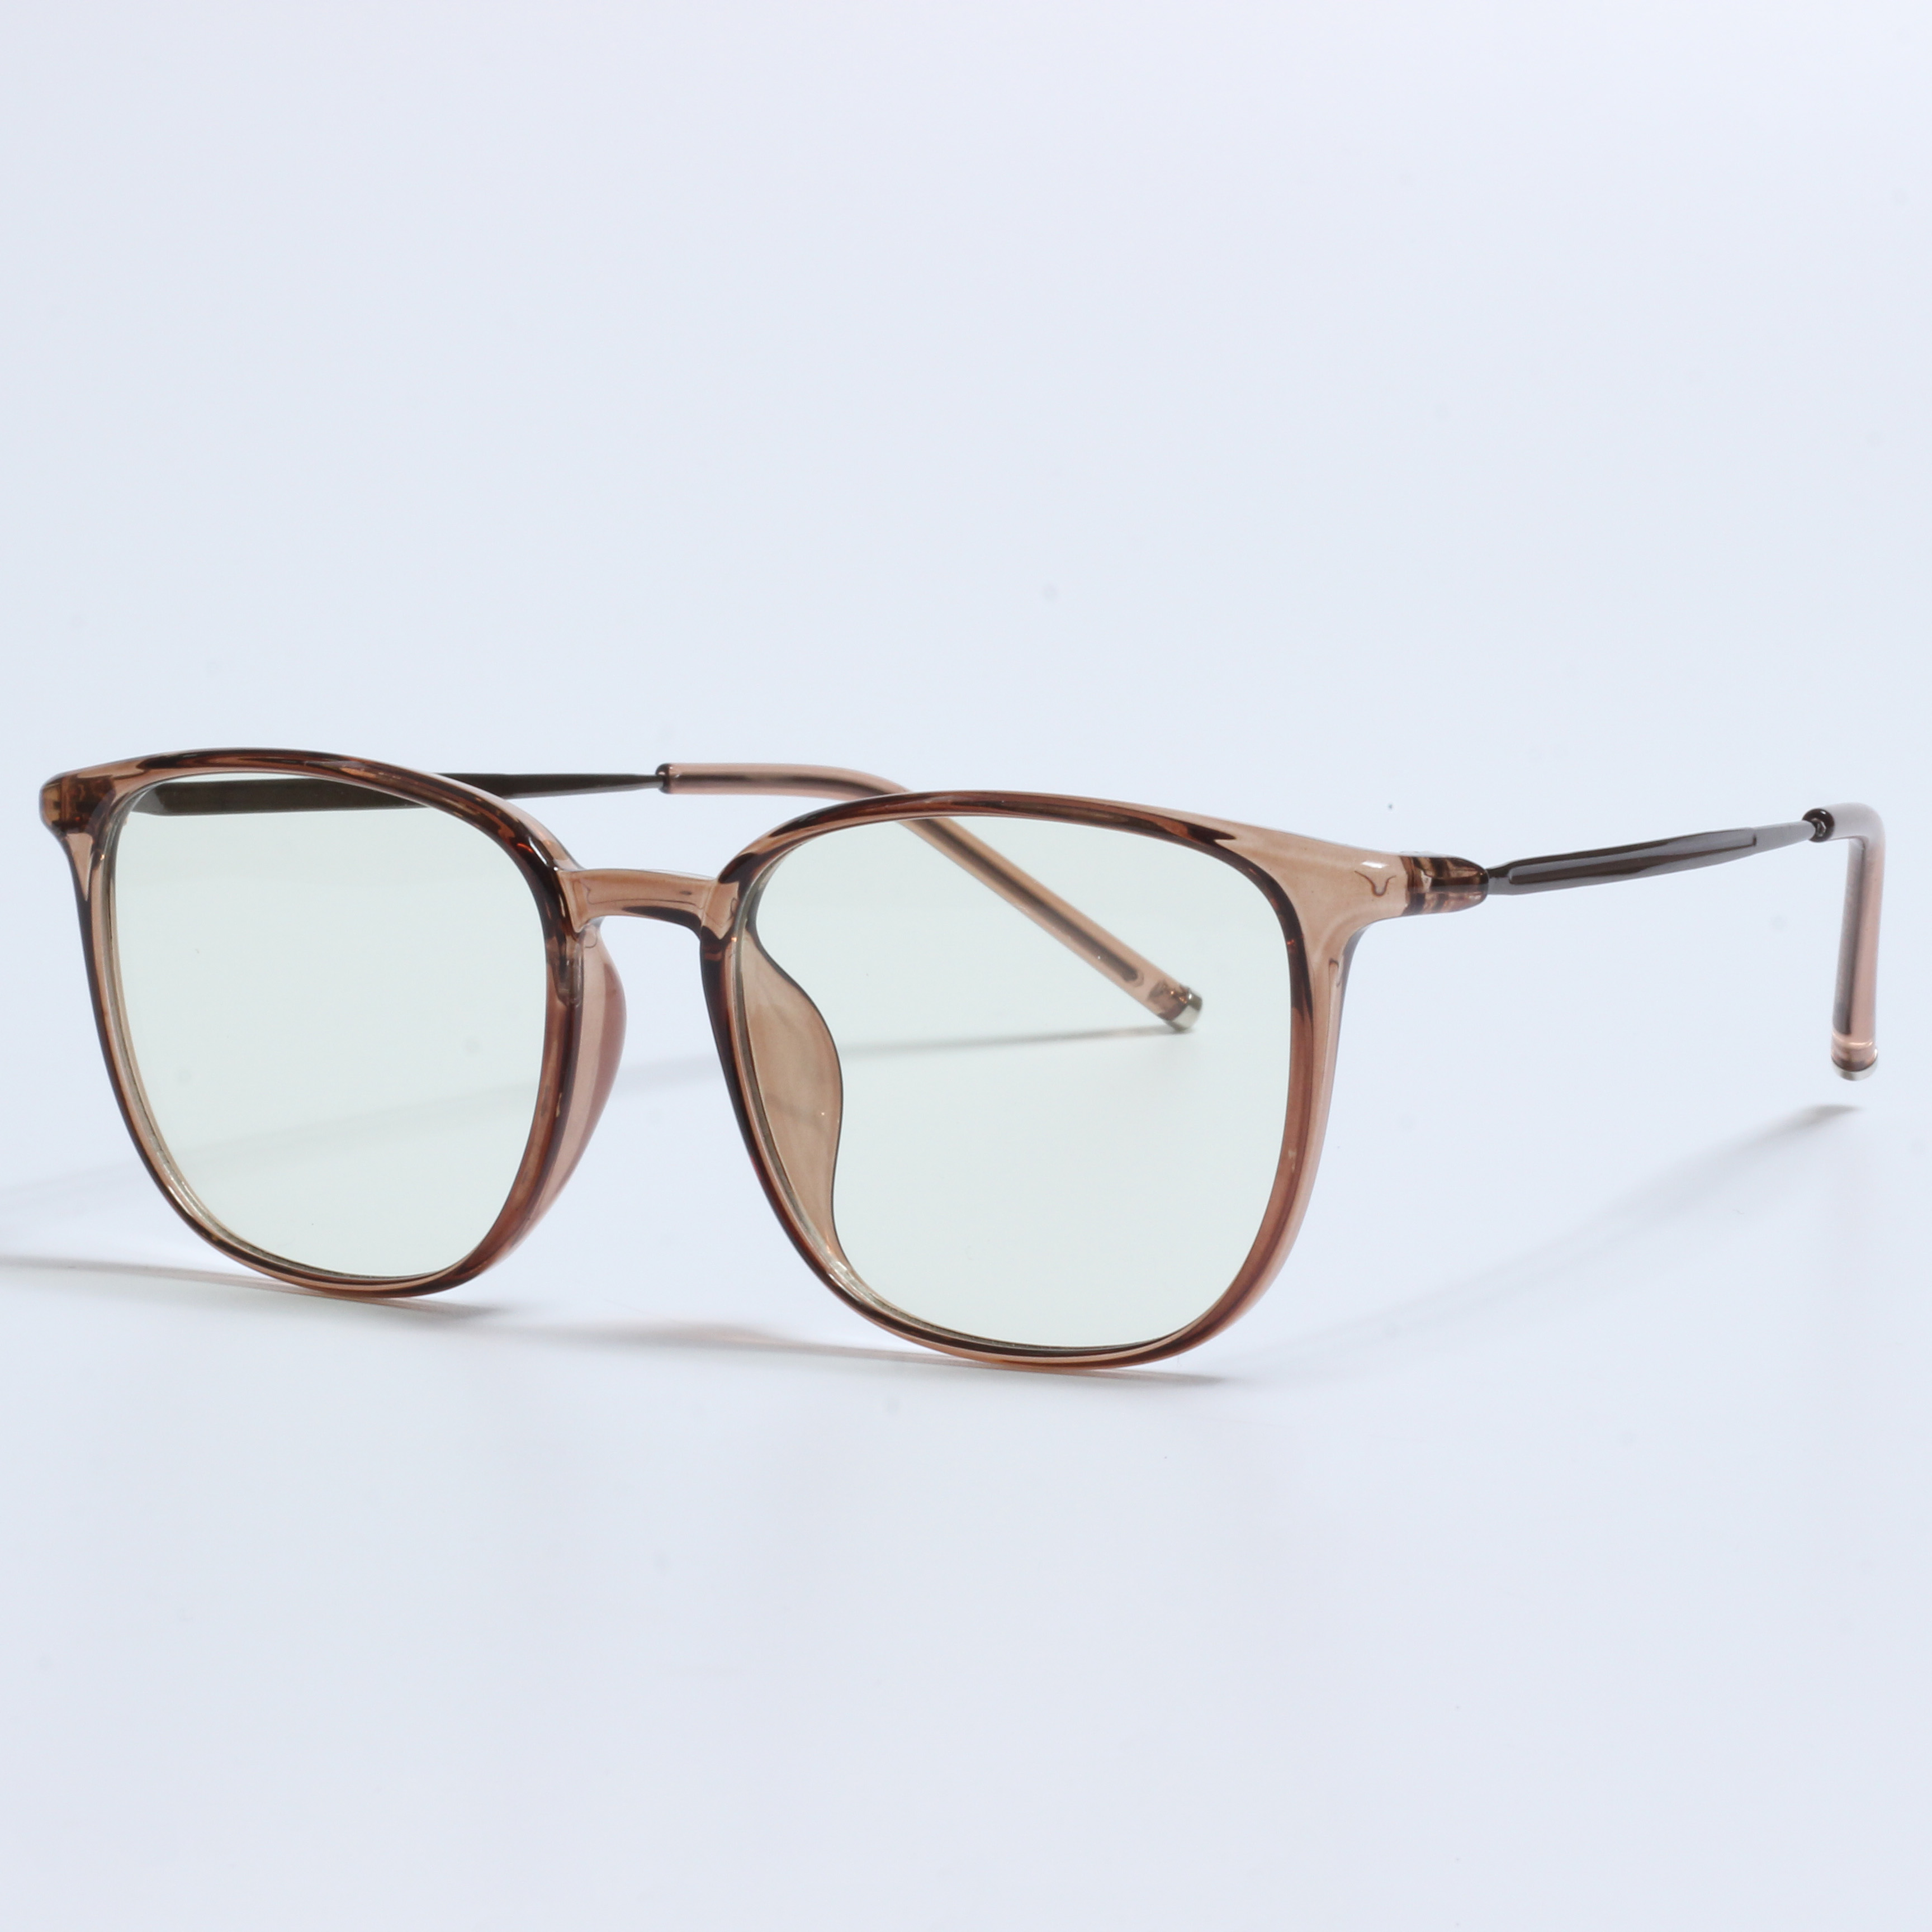 Bagong retro lunette anti lumiere designer na de-resetang baso (7)